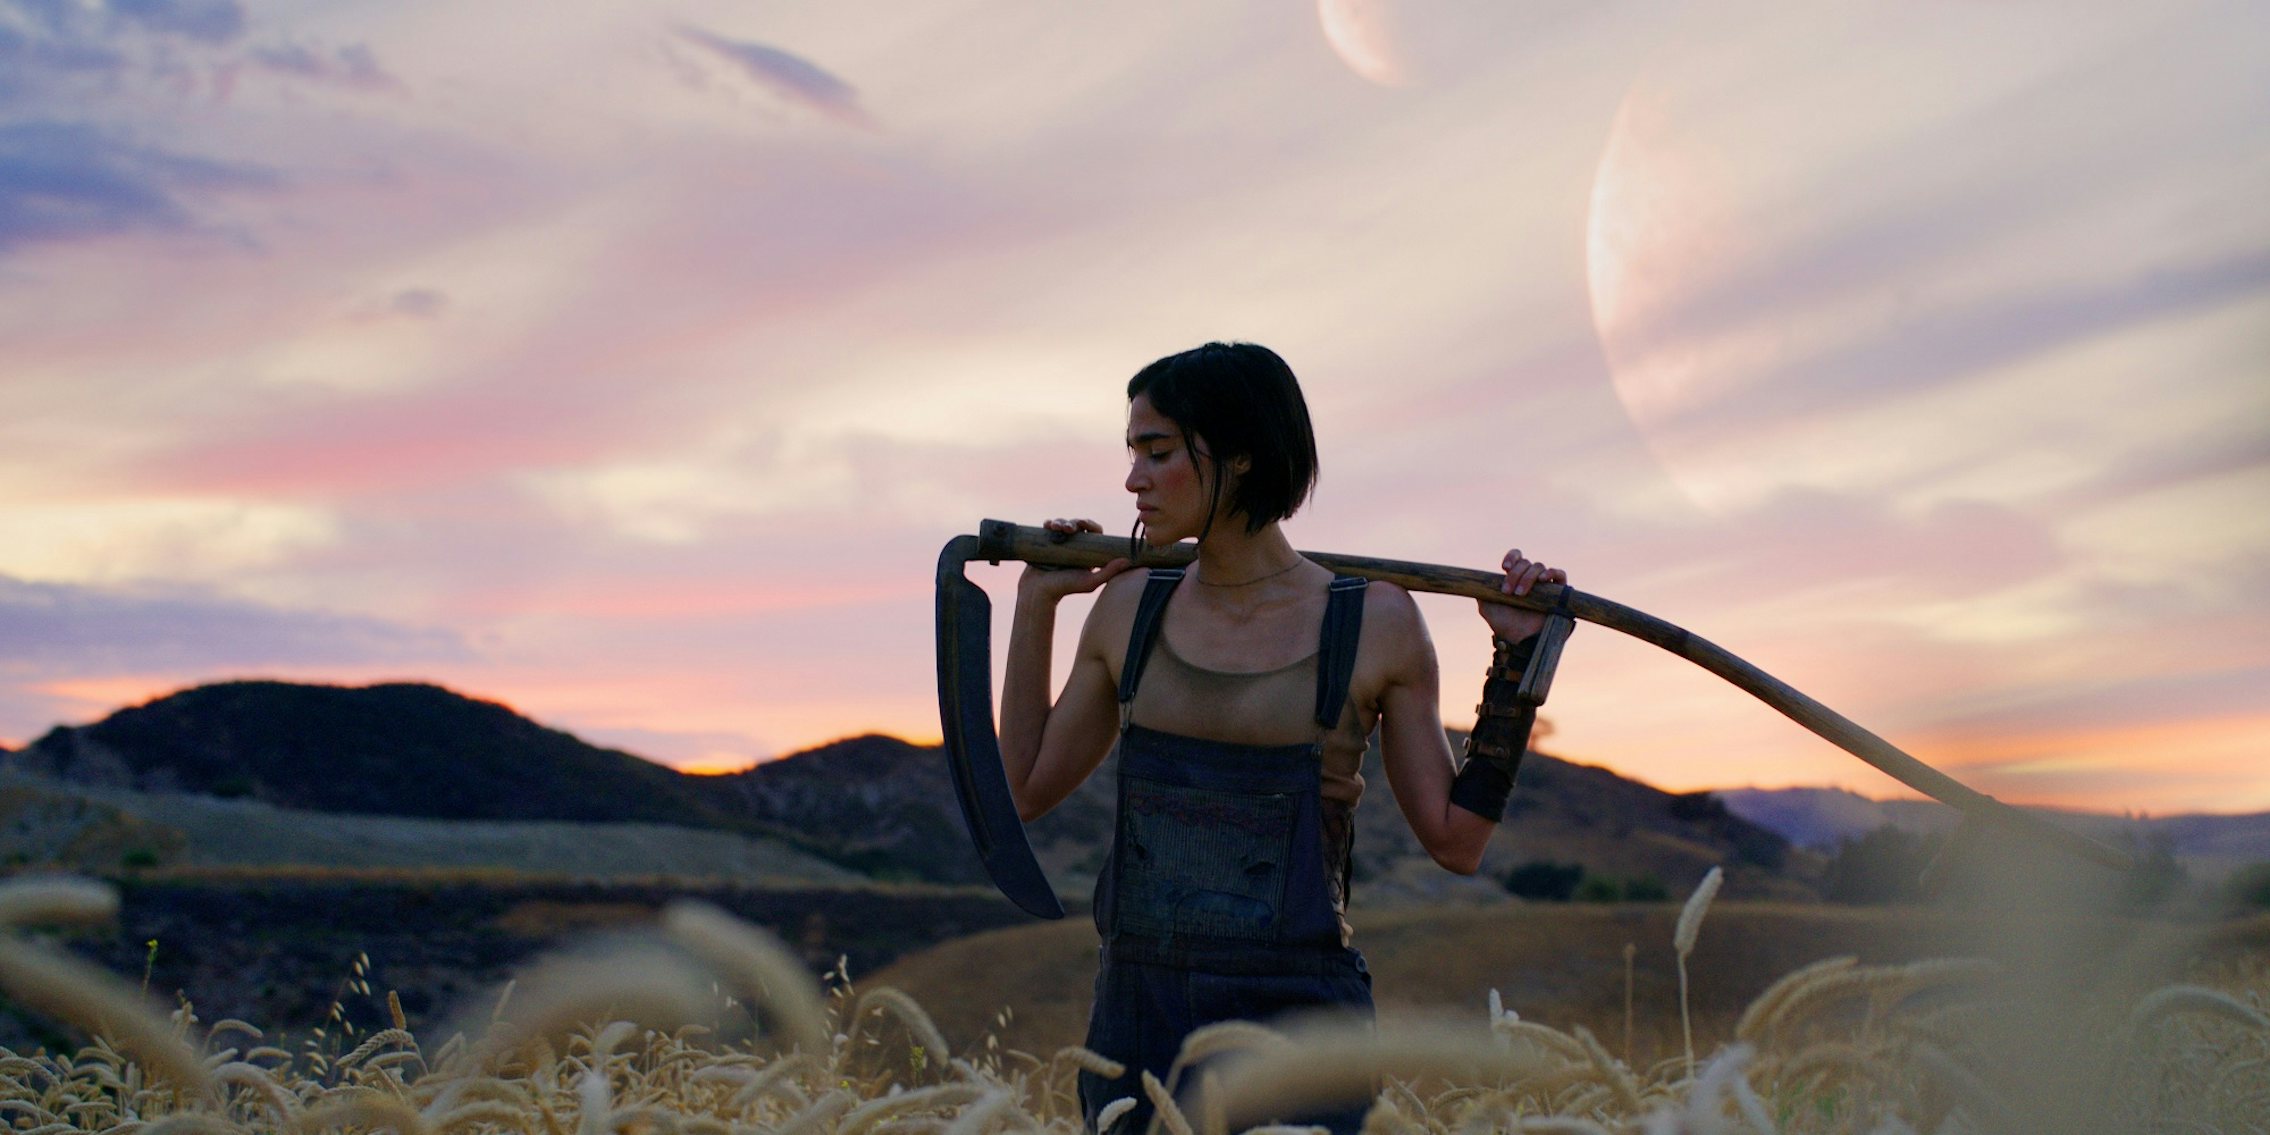 Rebel Moon' Trailer Reveals Zack Snyder's Take on Space Operas & Lightsabers